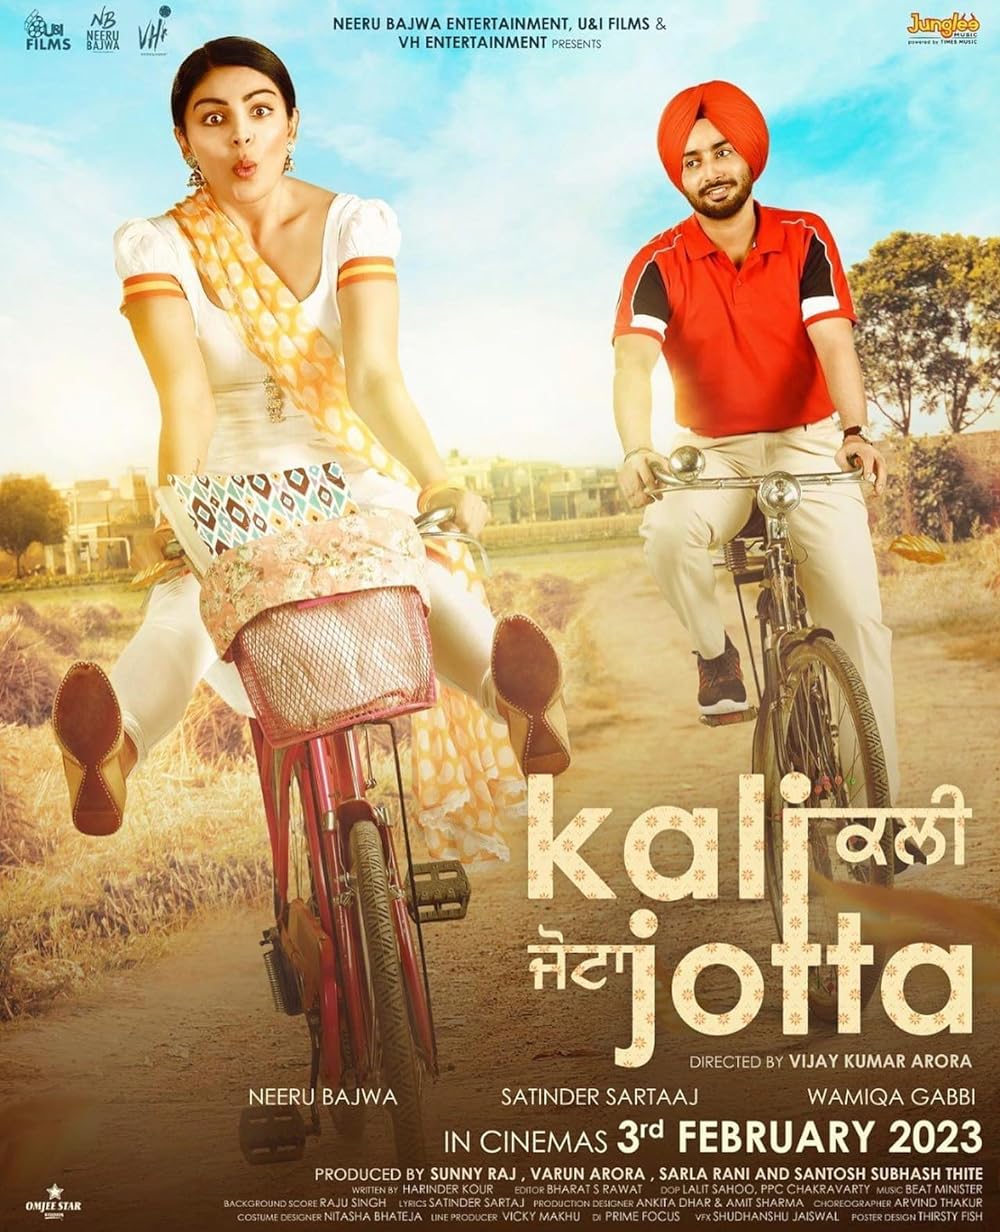 Download Kali Jotta (2023) Hindi Dubbed Movie WEB-DL 1080p [3GB]